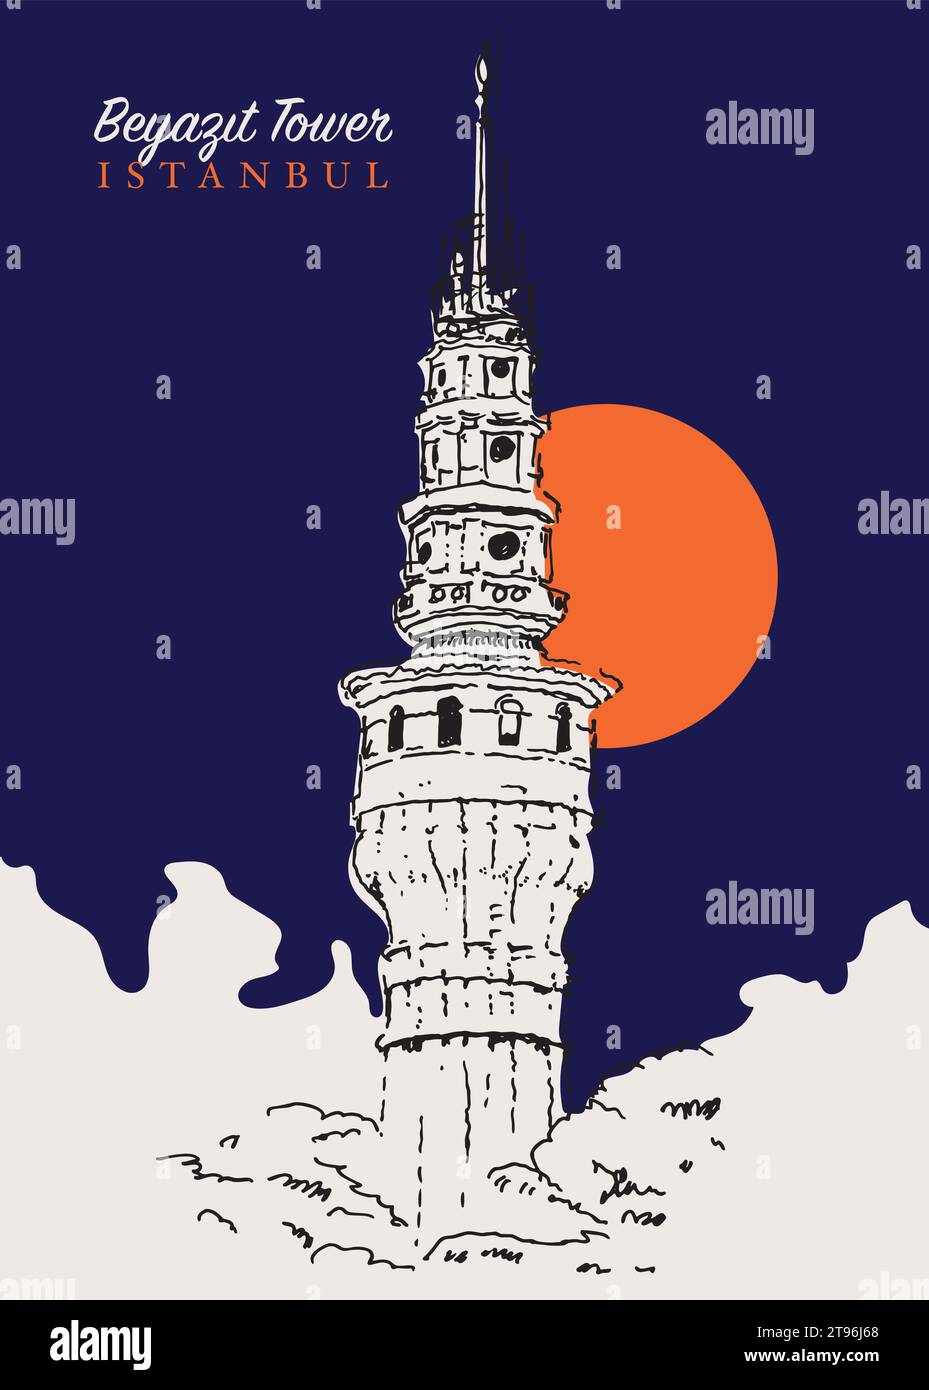 Vector hand drawn sketch illustration of Beyazit Tower in Istanbul, Turkiye. Stock Vector